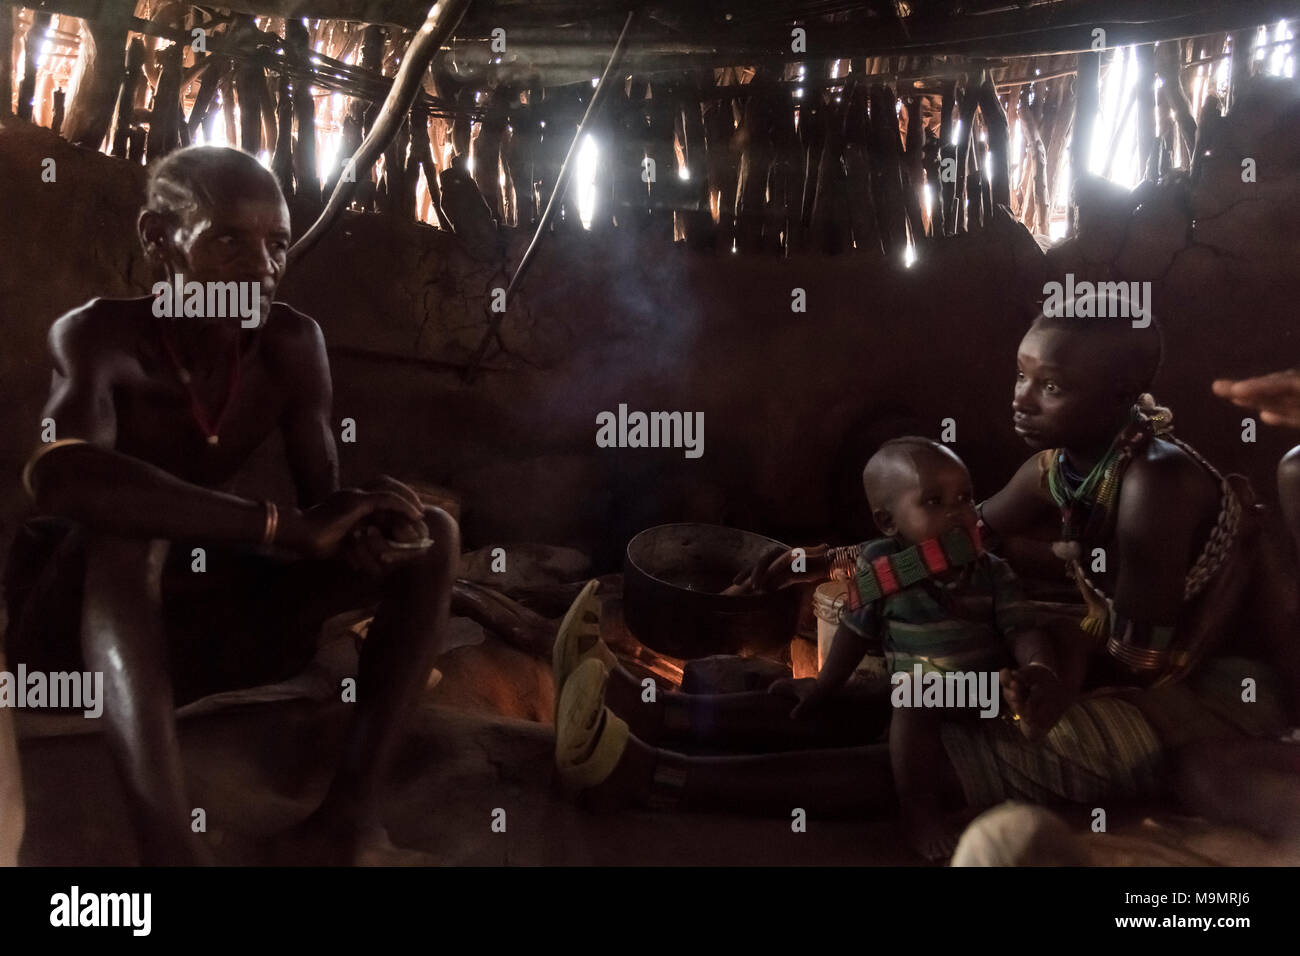 Family sits in mud hut, hamer tribe, Turmi, region of southern nations, Ethiopia Stock Photo